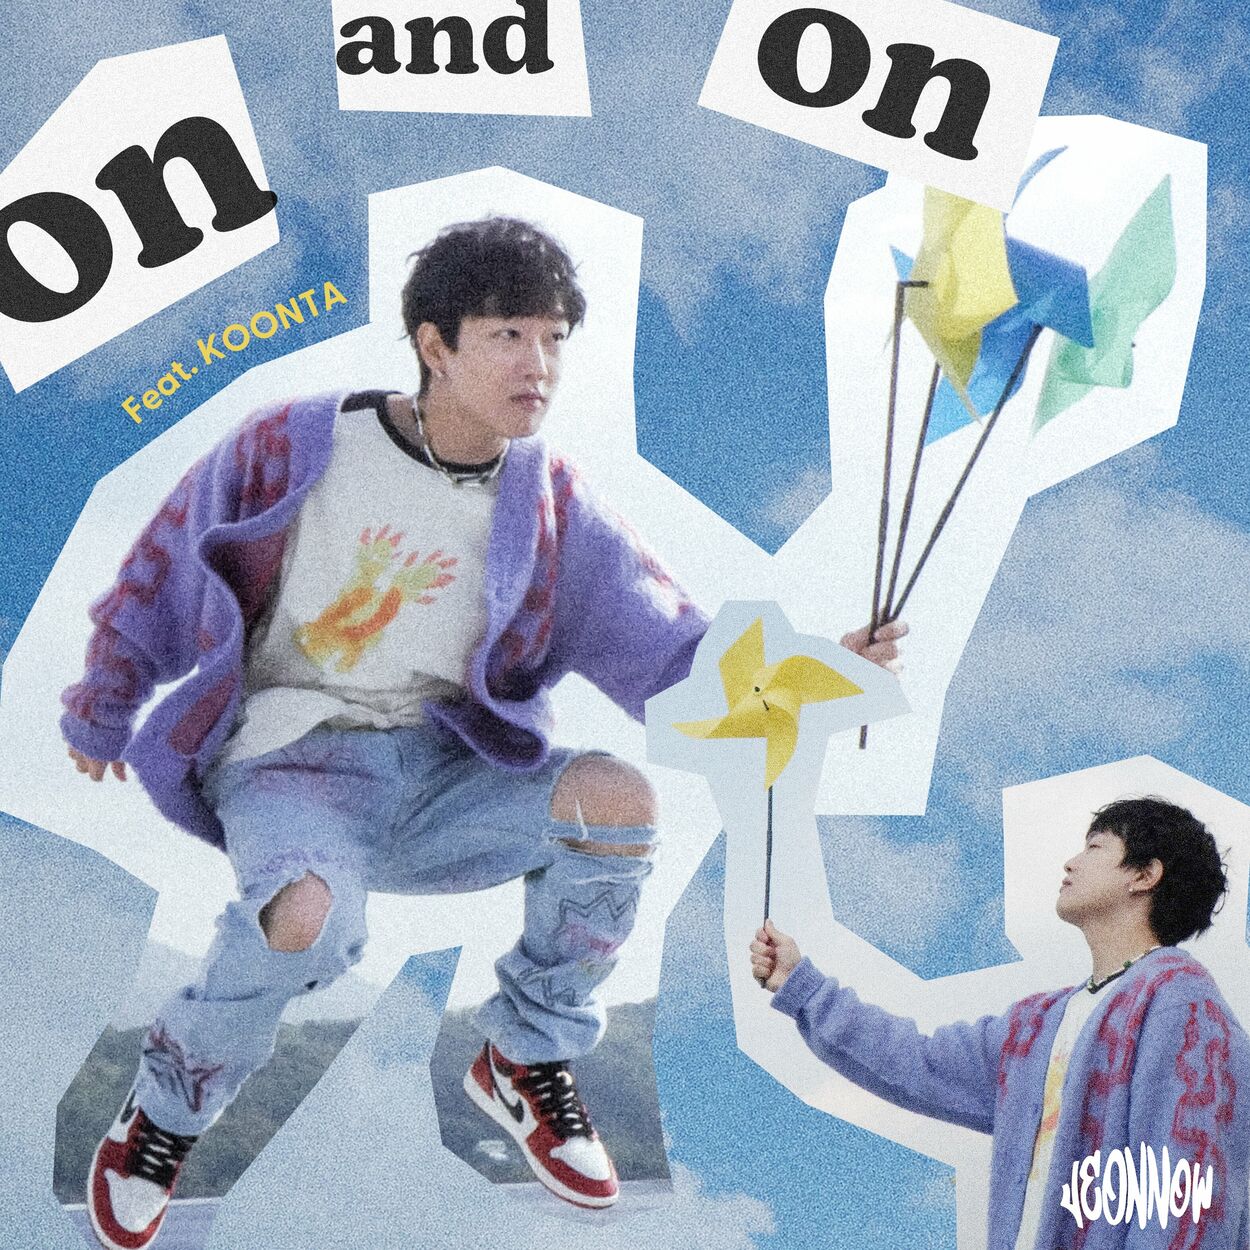 JEON NOW – on and on (Feat. KOONTA) – Single